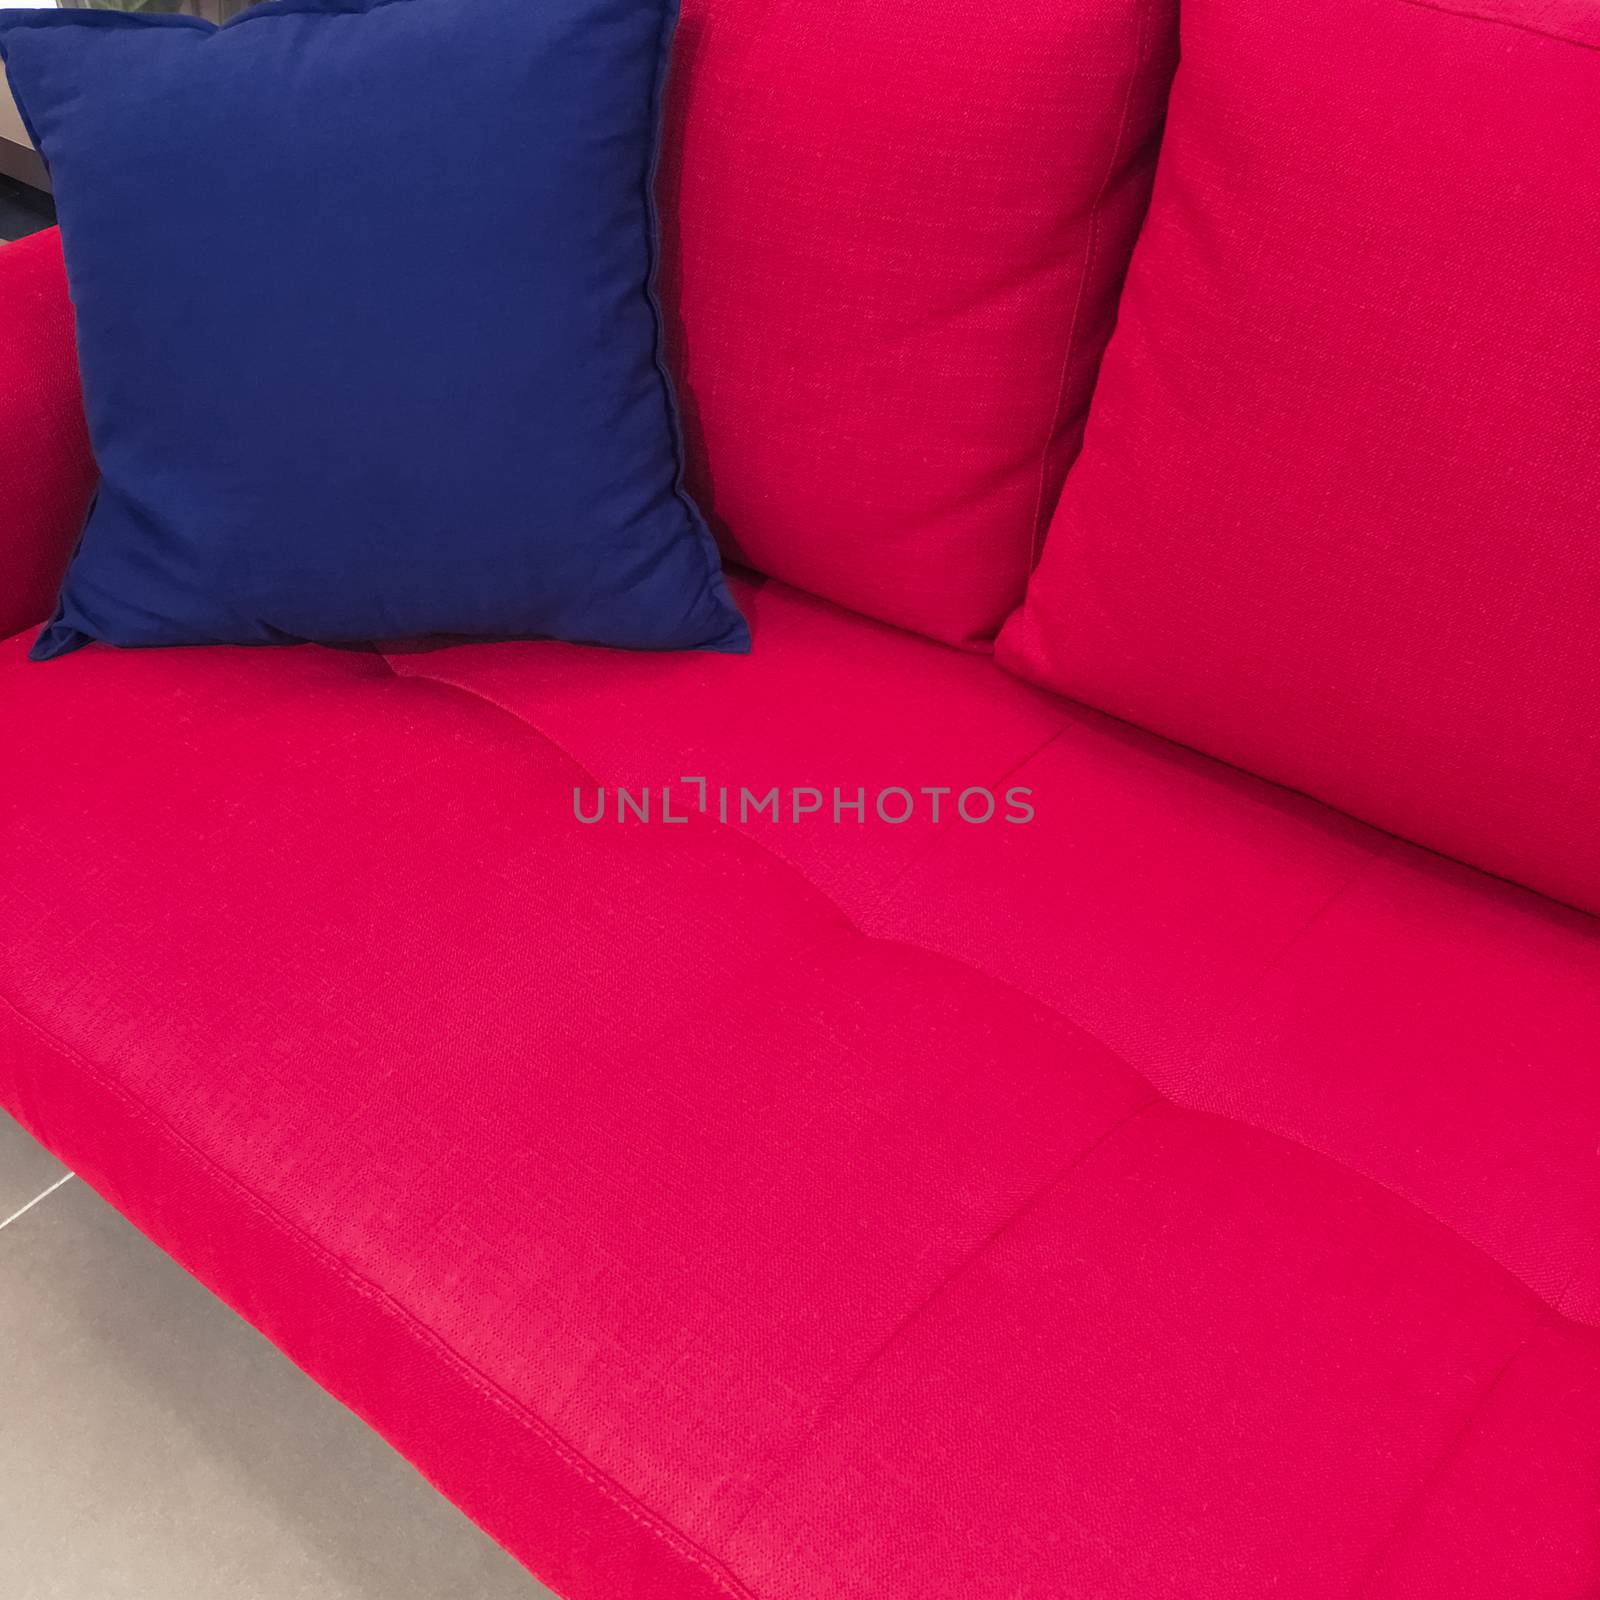 Blue cushion on a red sofa by anikasalsera